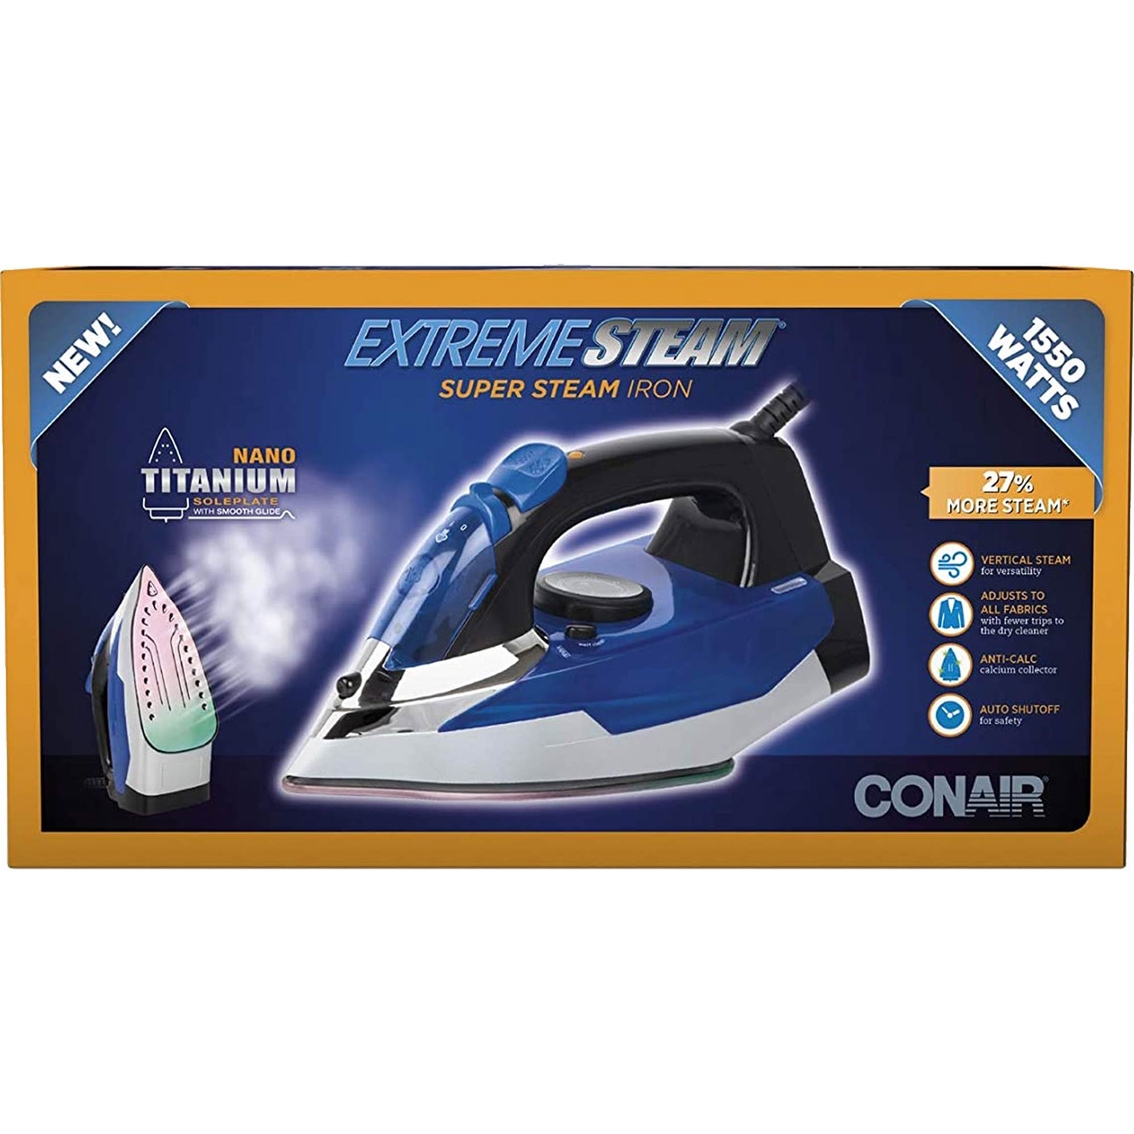 Conair ExtremeSteam Super Steam Iron - Image 3 of 5